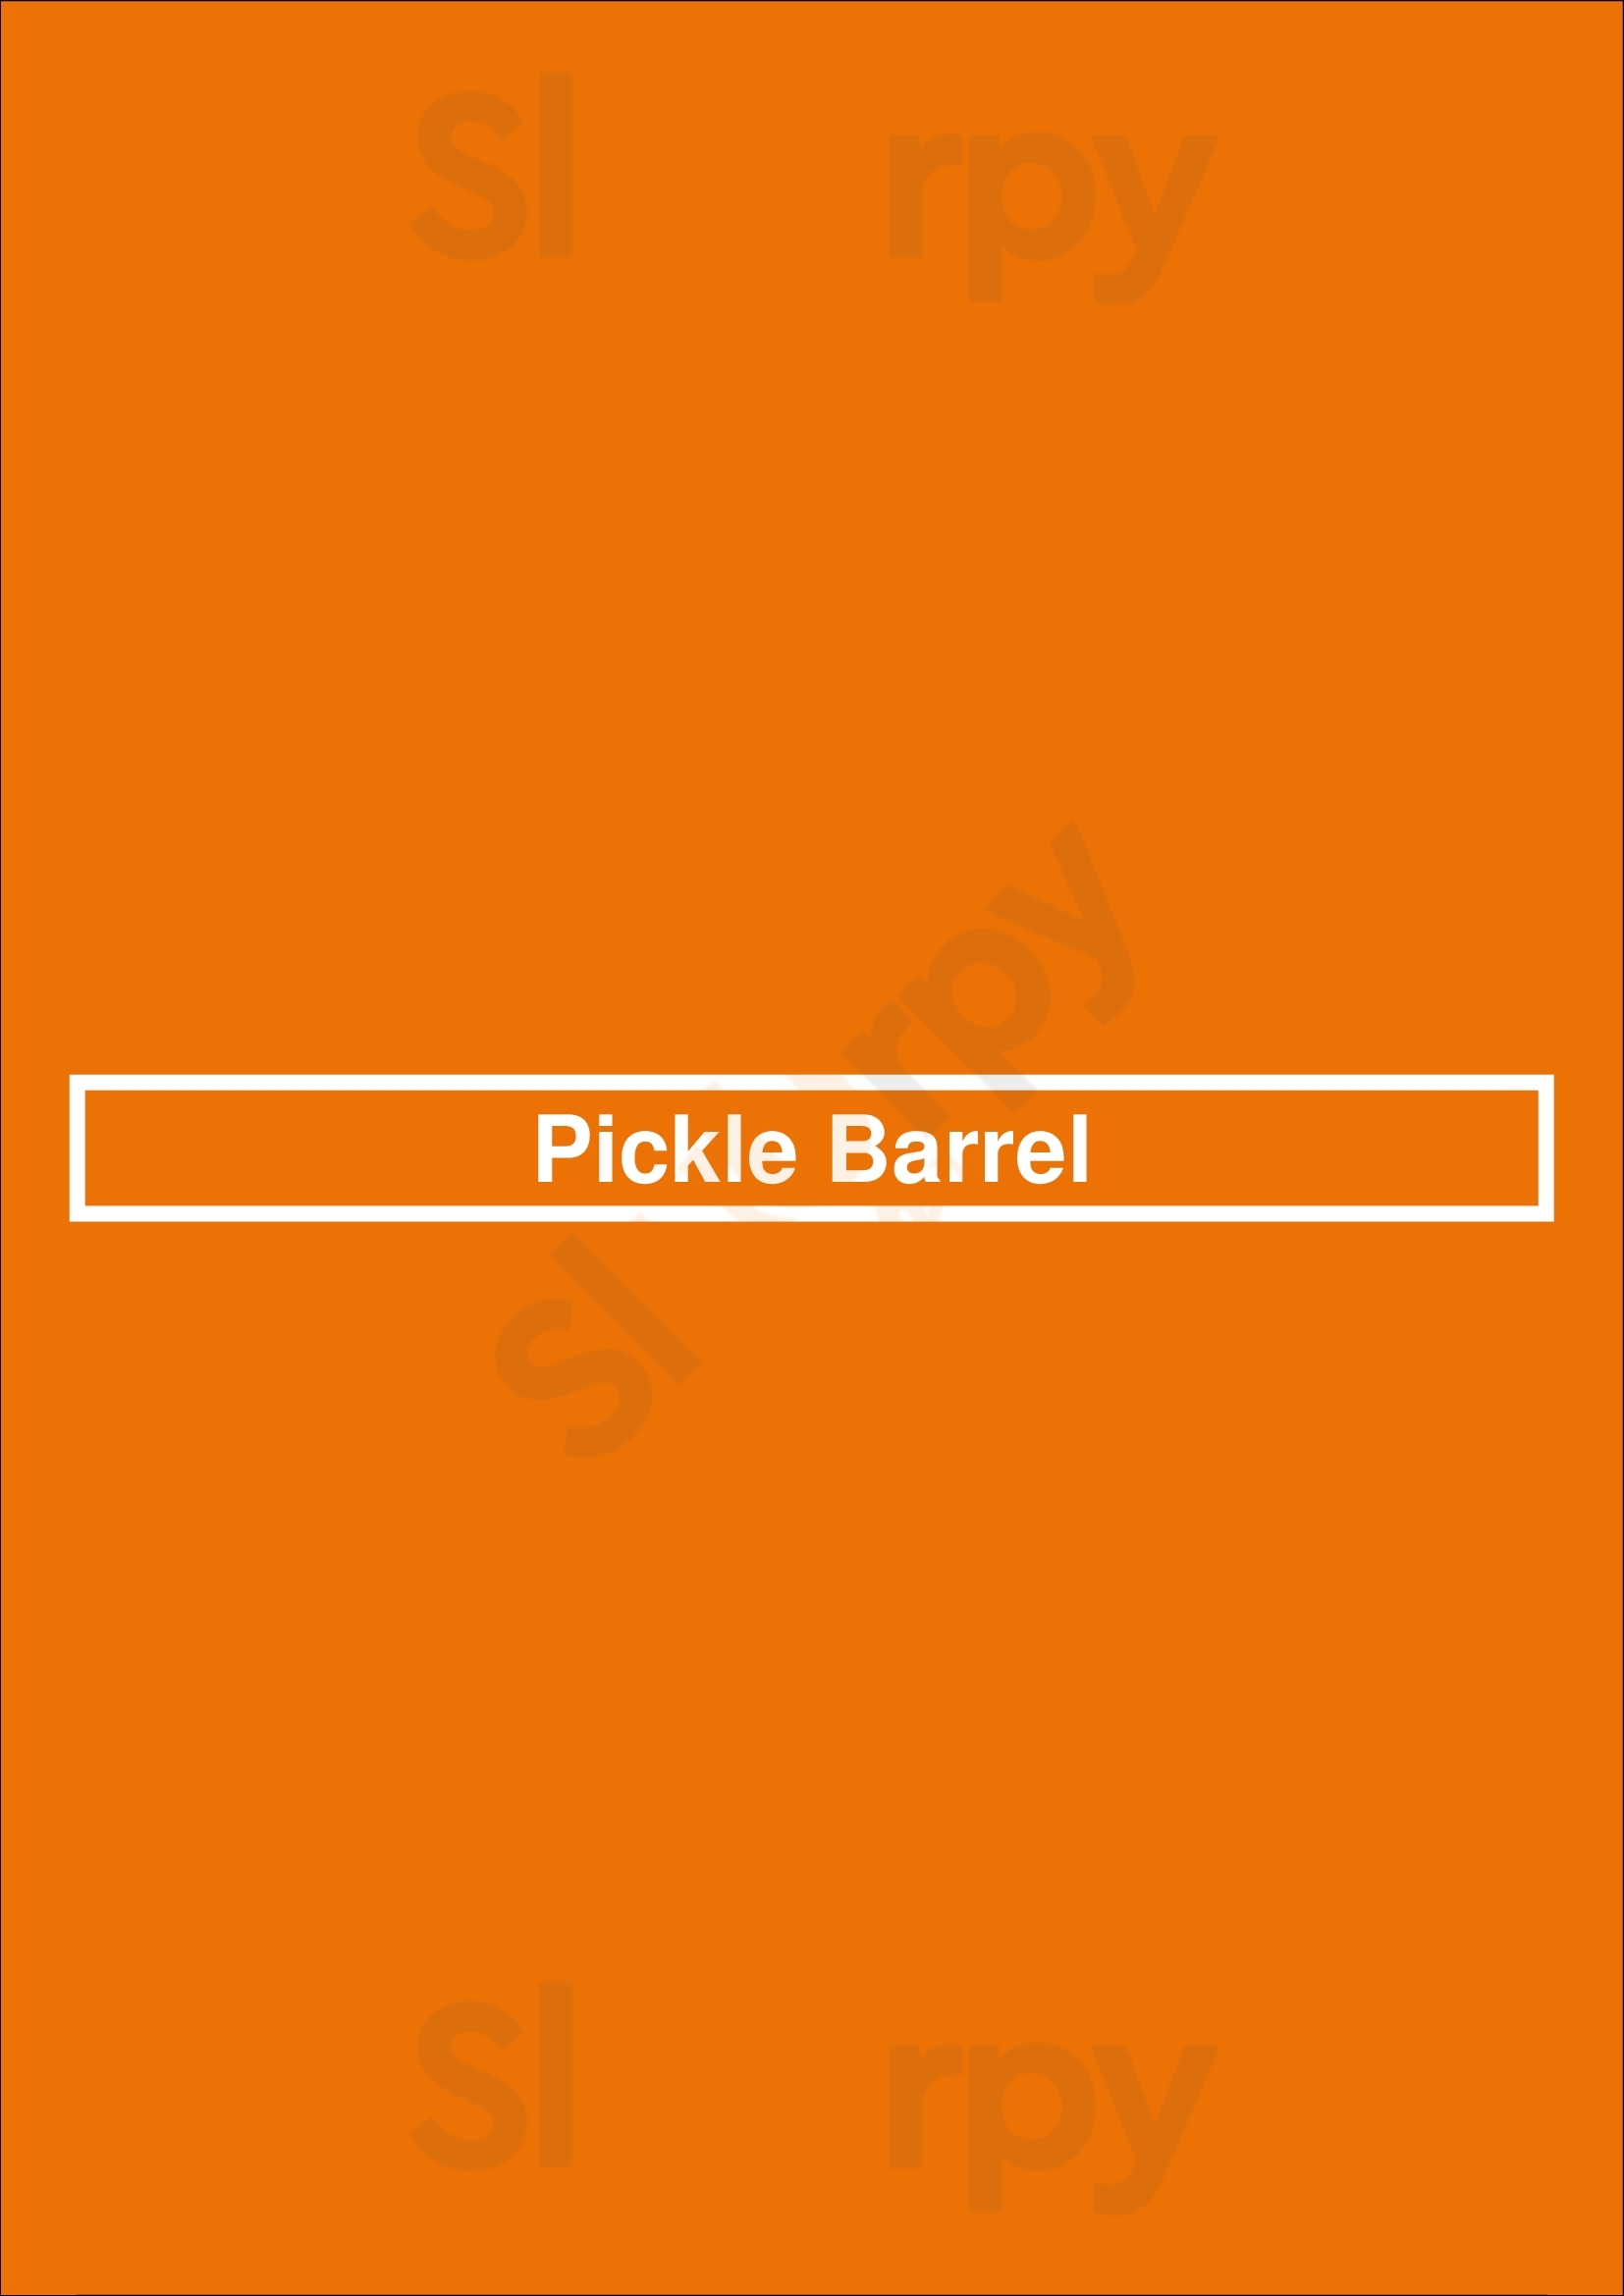 Pickle Barrel Toronto Menu - 1